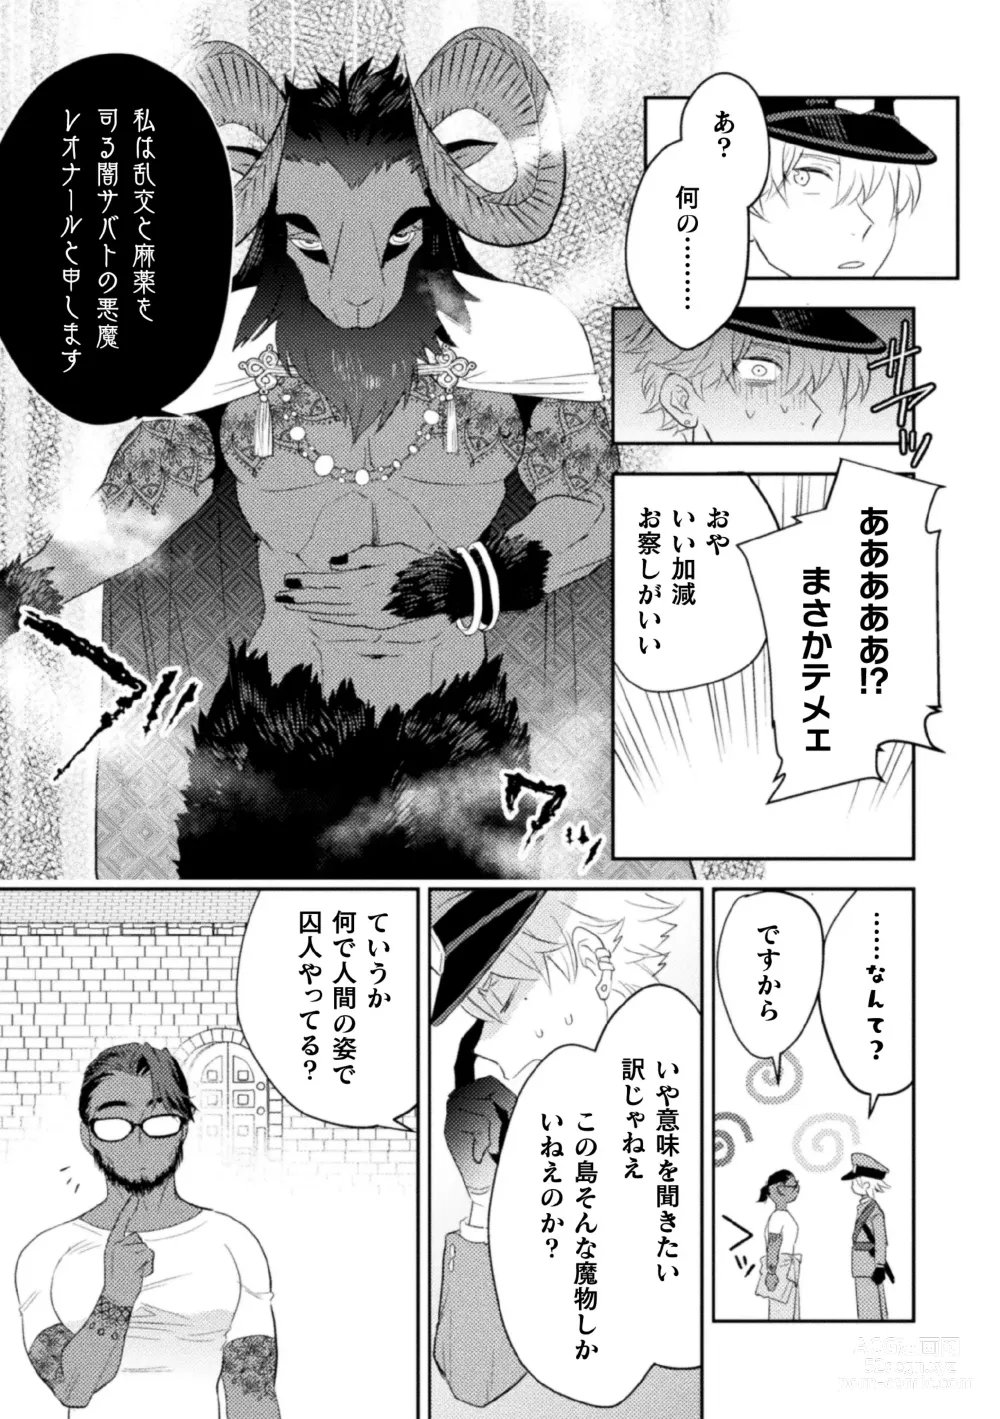 Page 13 of manga Zekkai Rougoku 4 Zekkai no Ori to Inma no Wana